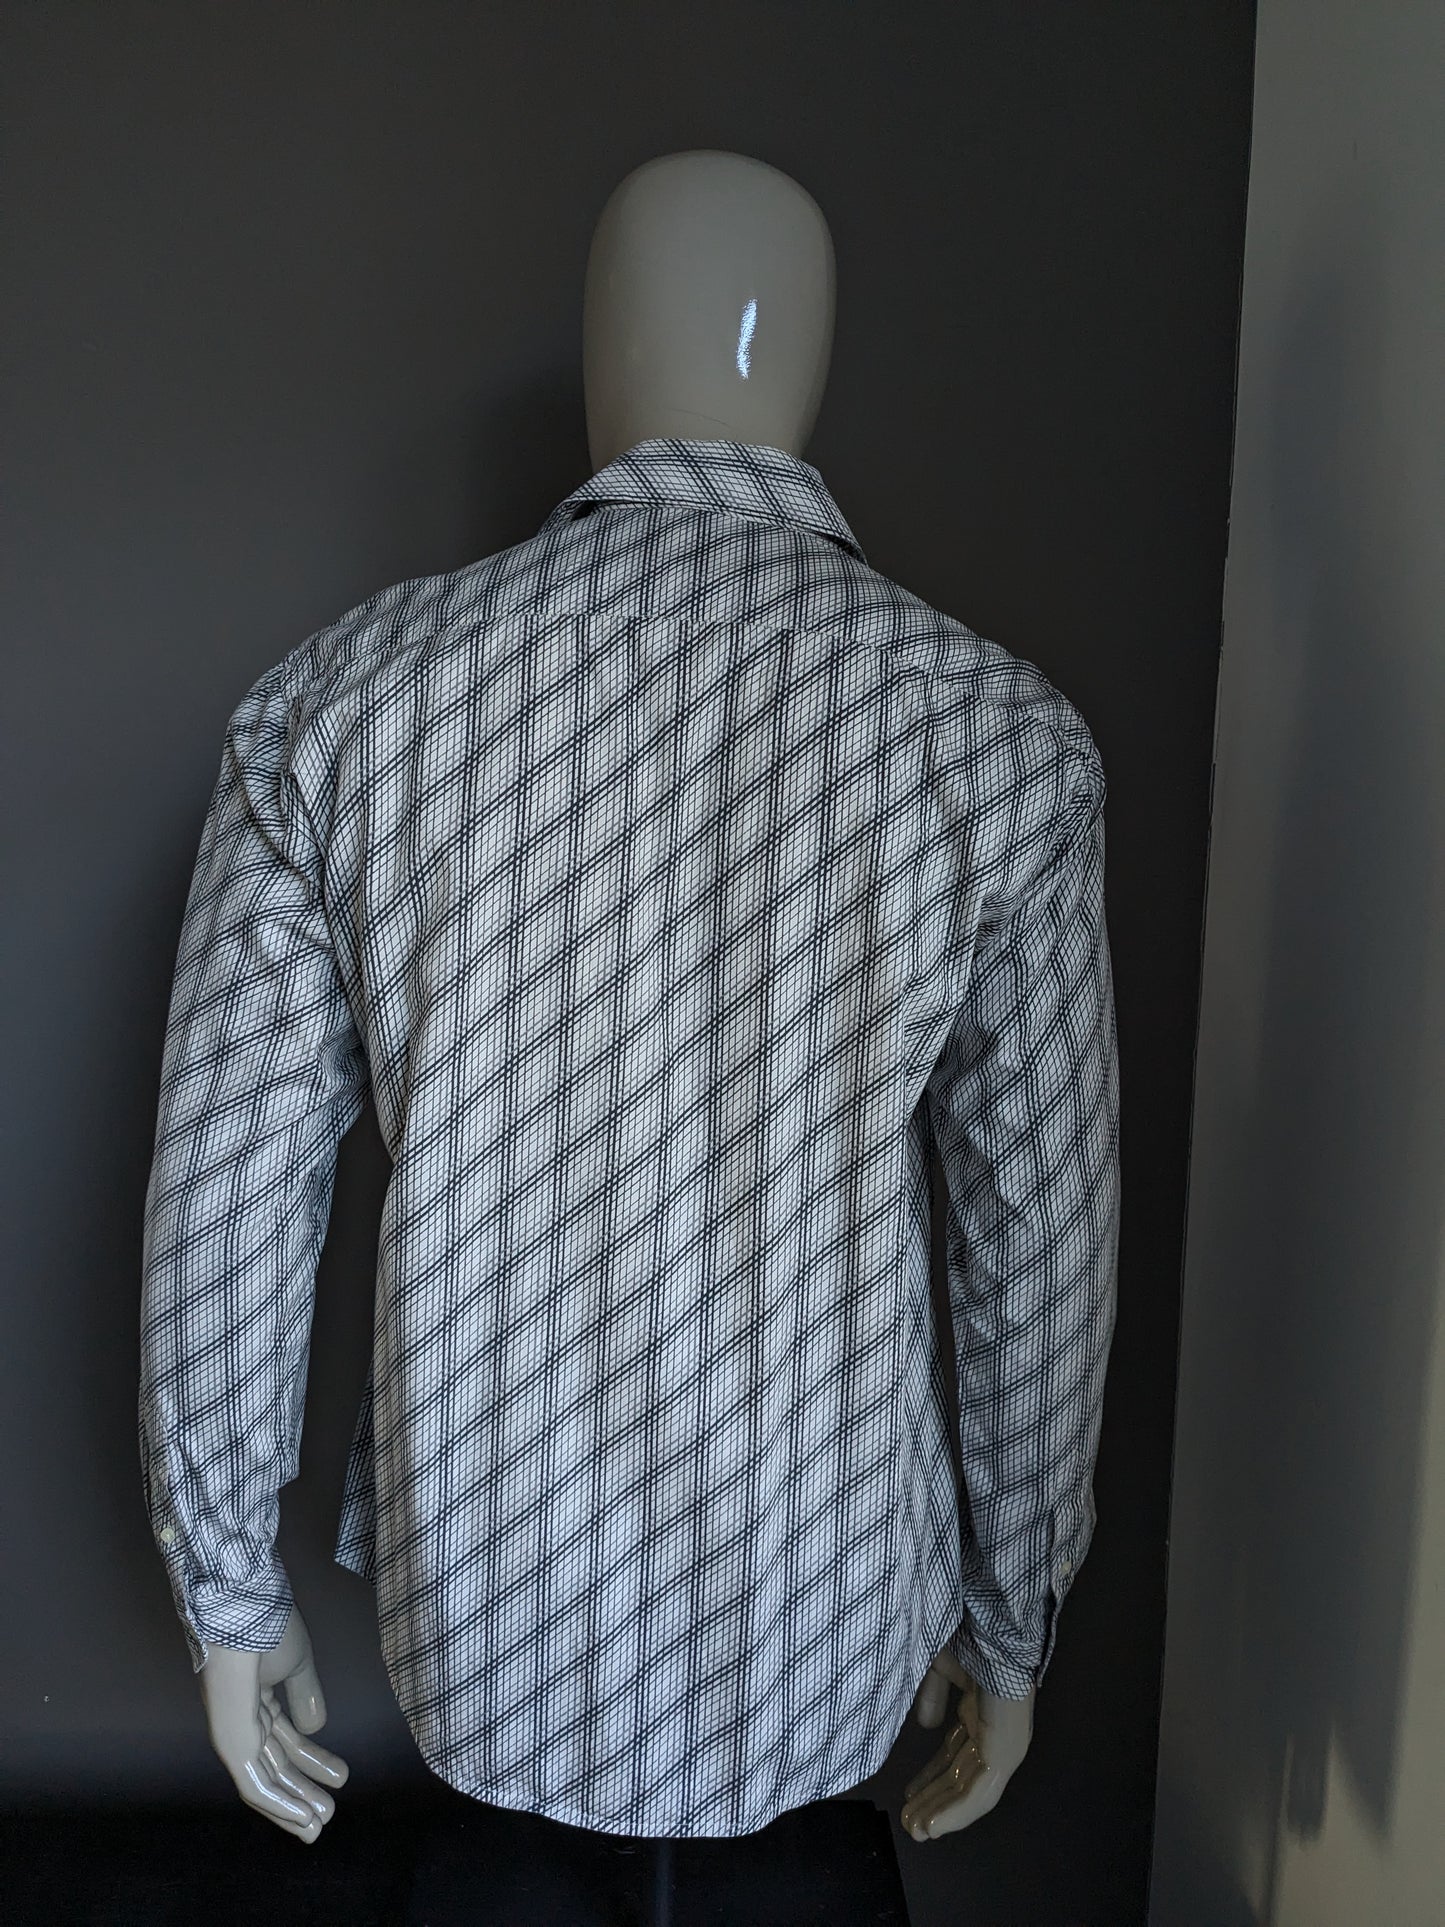 Esprit shirt. Beige gray print. Size L.